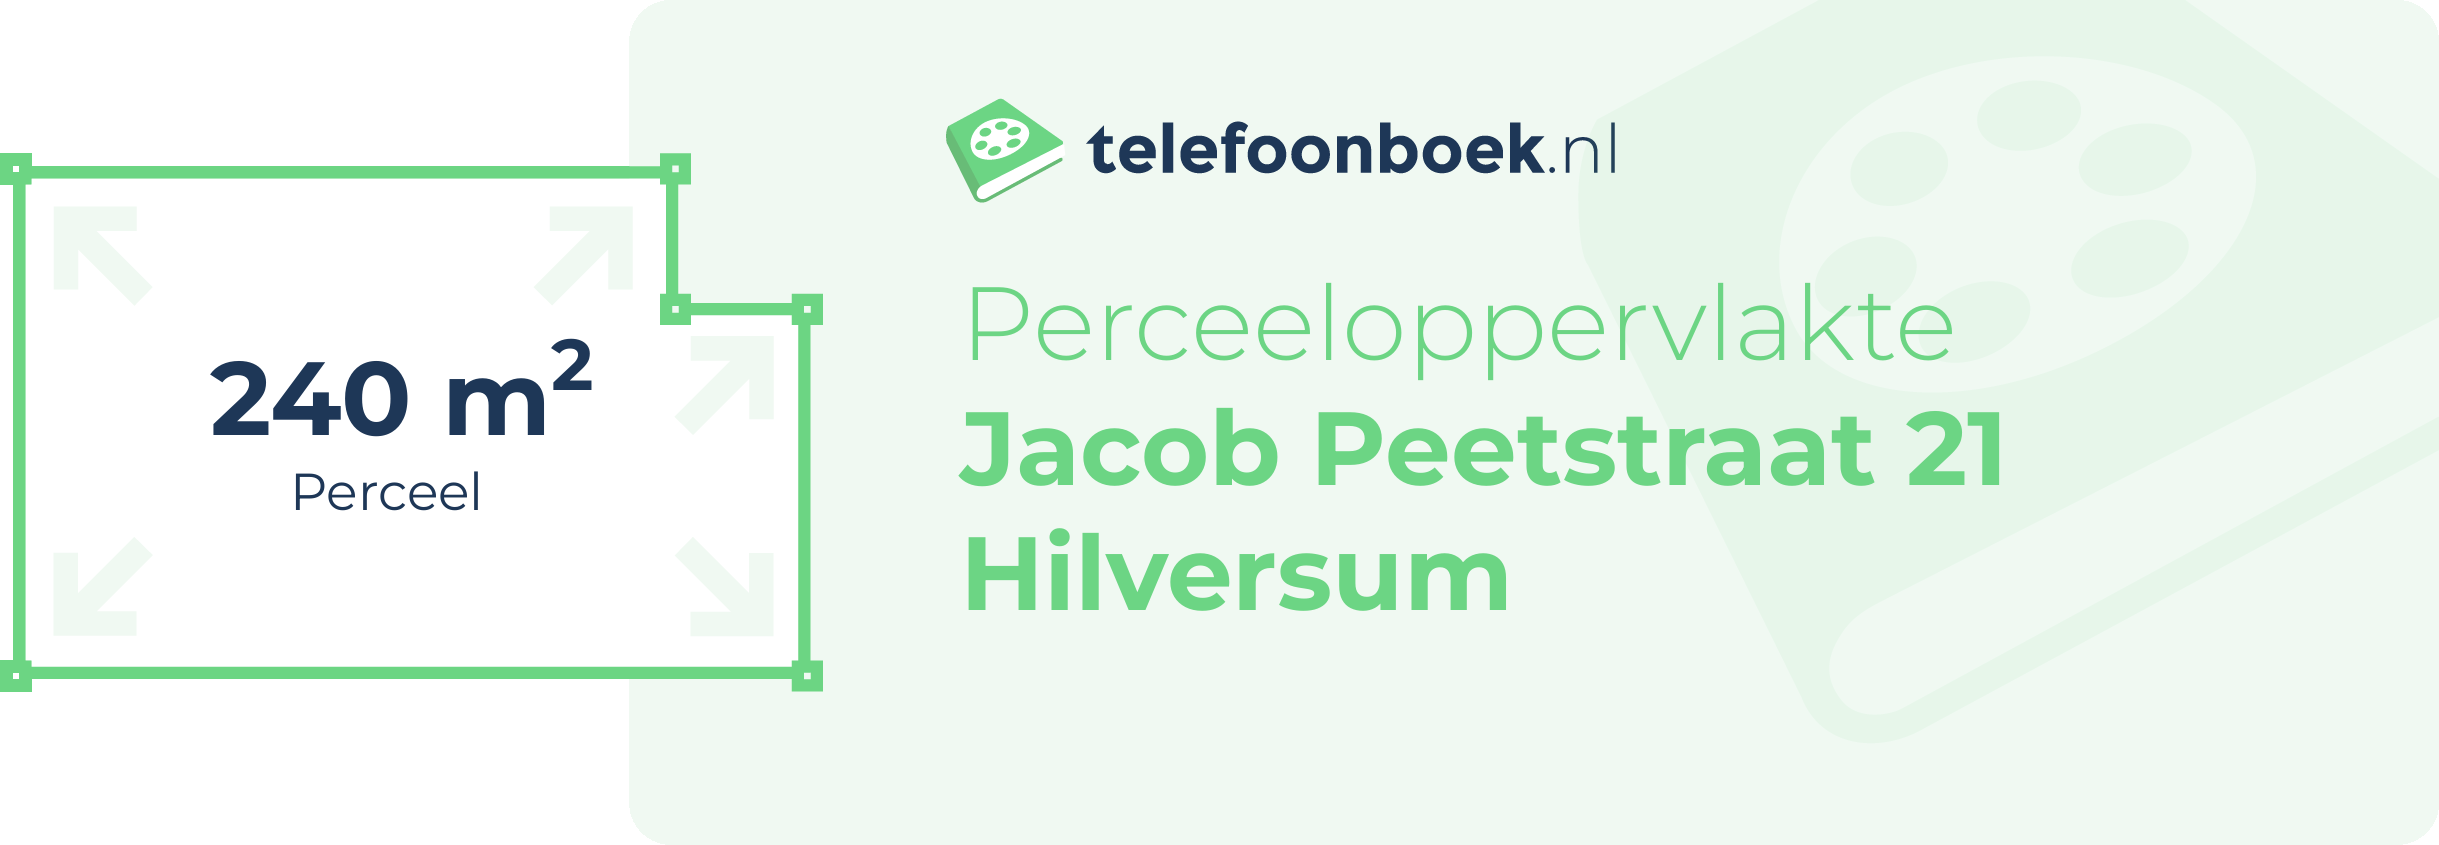 Perceeloppervlakte Jacob Peetstraat 21 Hilversum